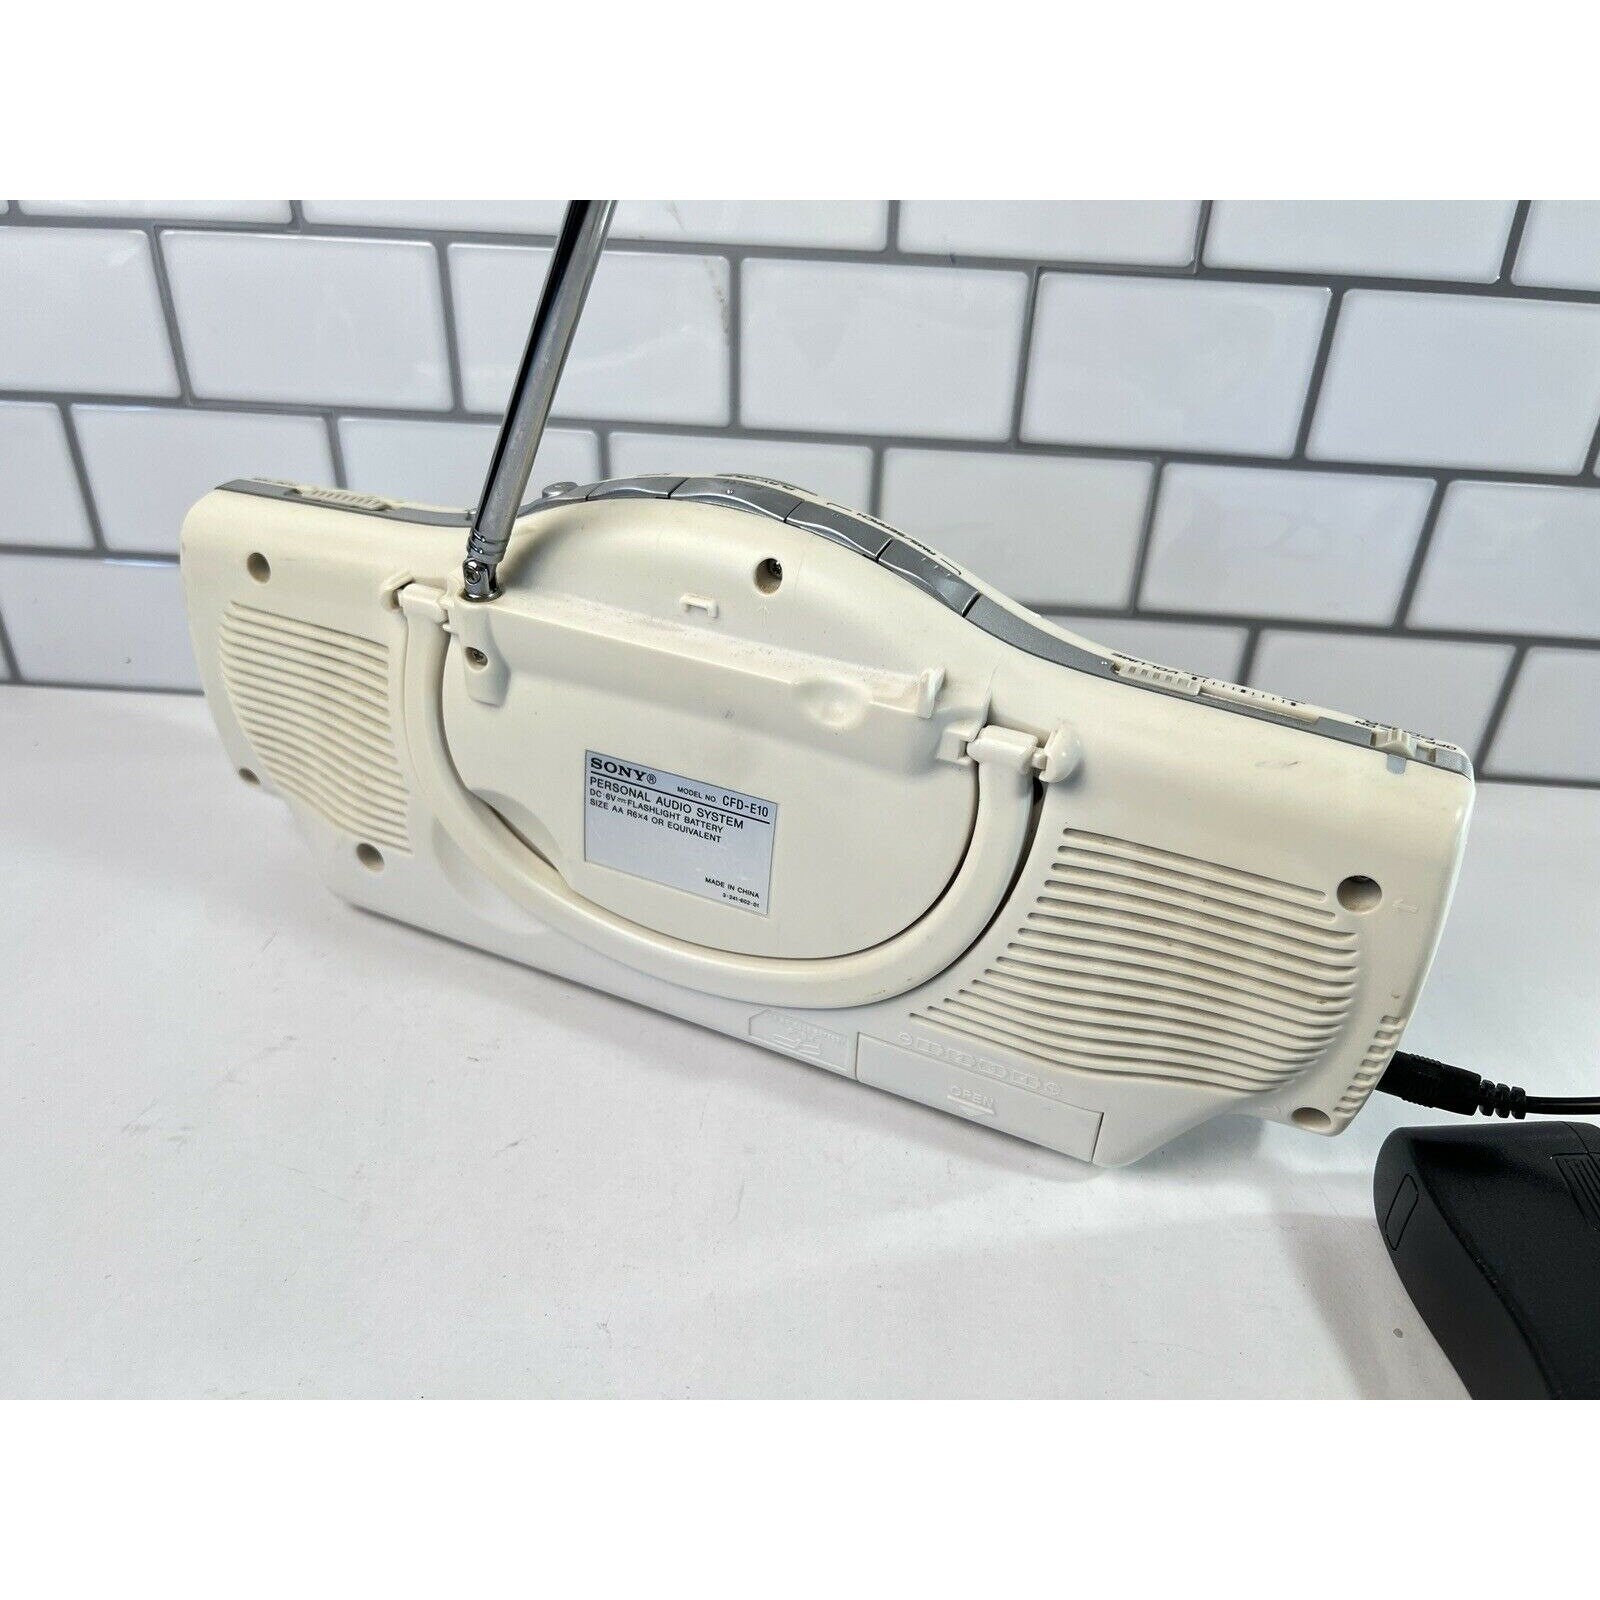 Sony CFD-E10 CD Radio Boombox